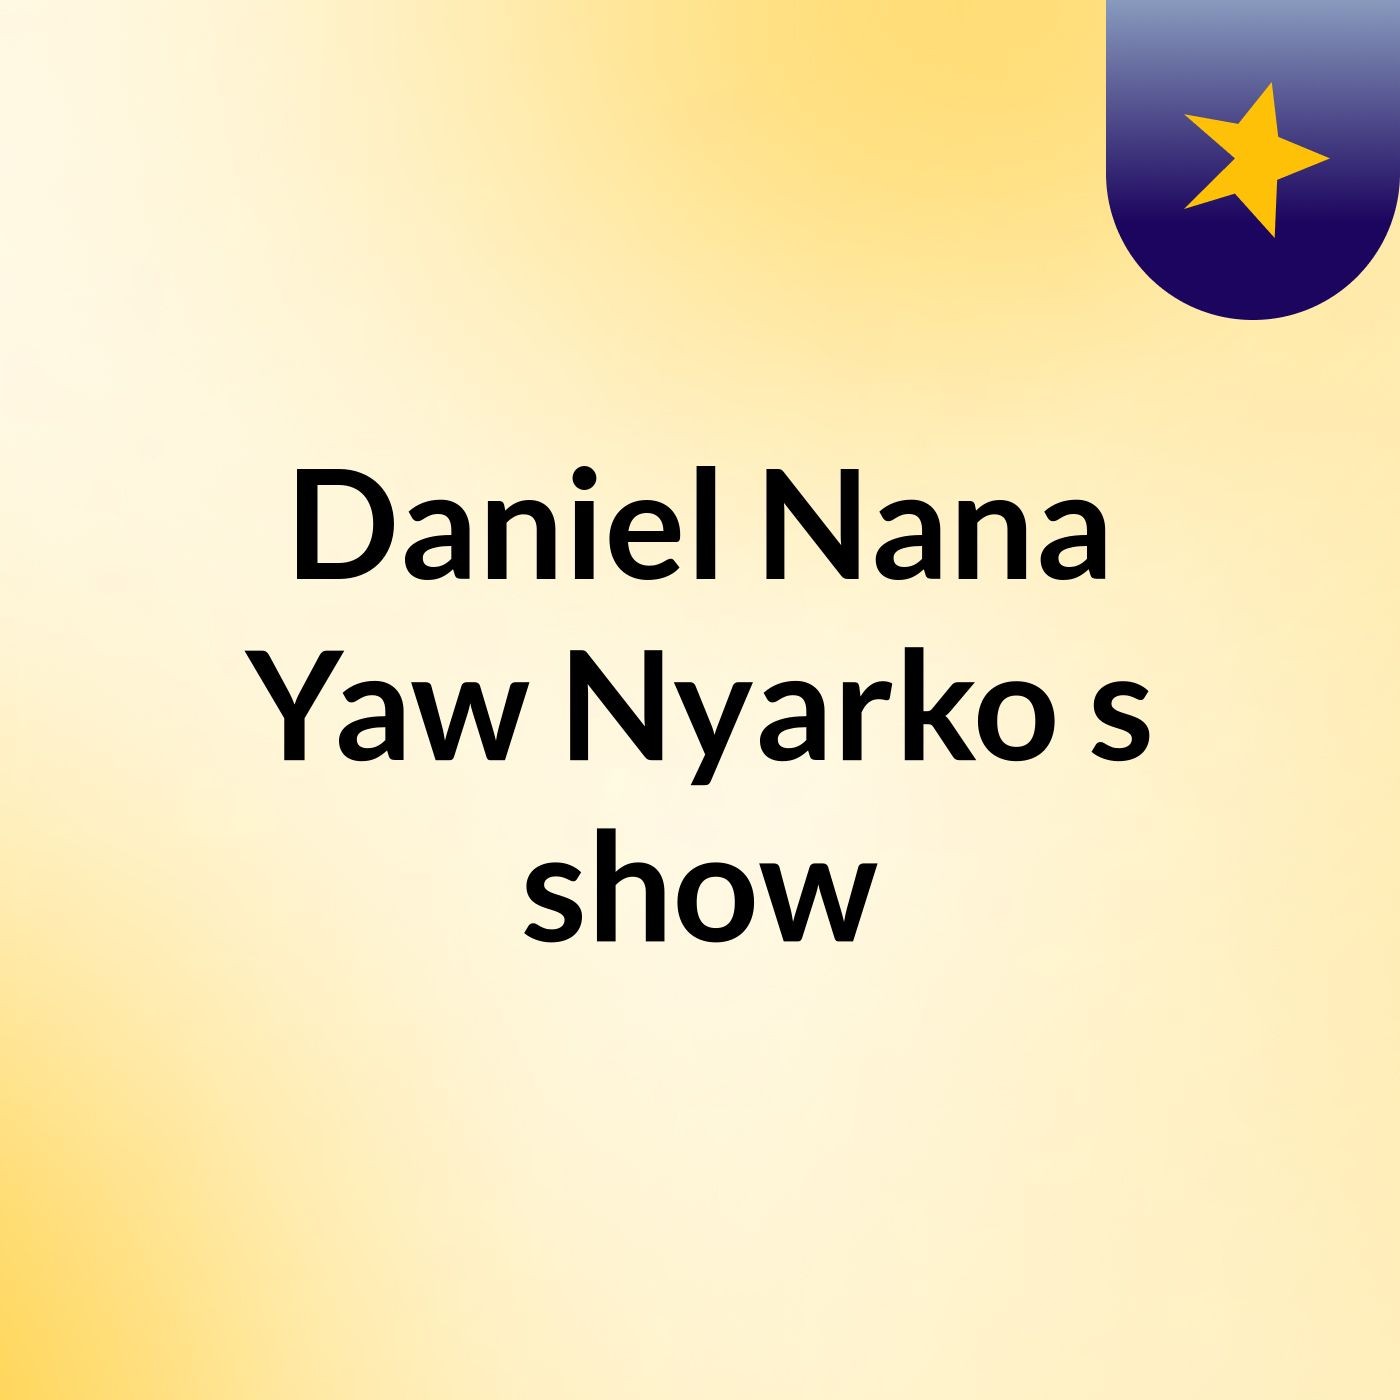 Episode 4 - Daniel Nana Yaw Nyarko's show